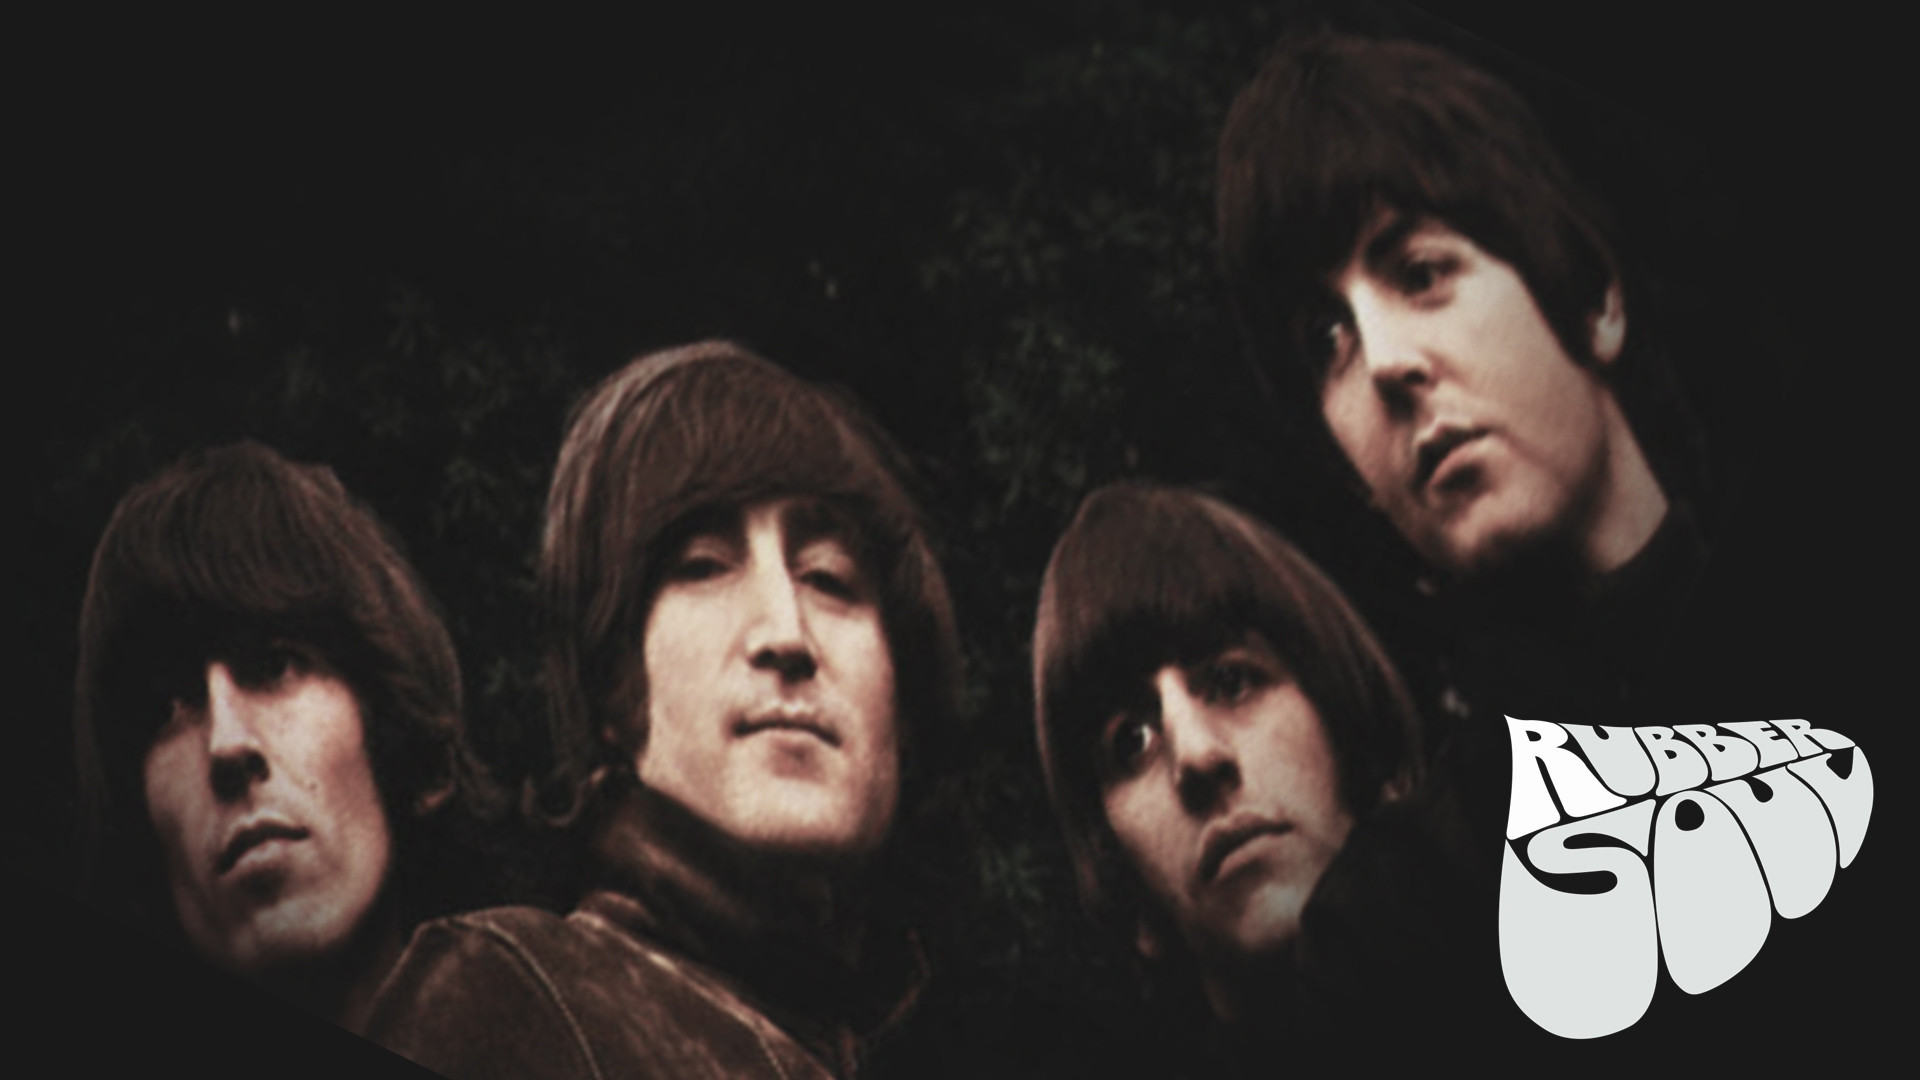 Music The Beatles 1920x1080